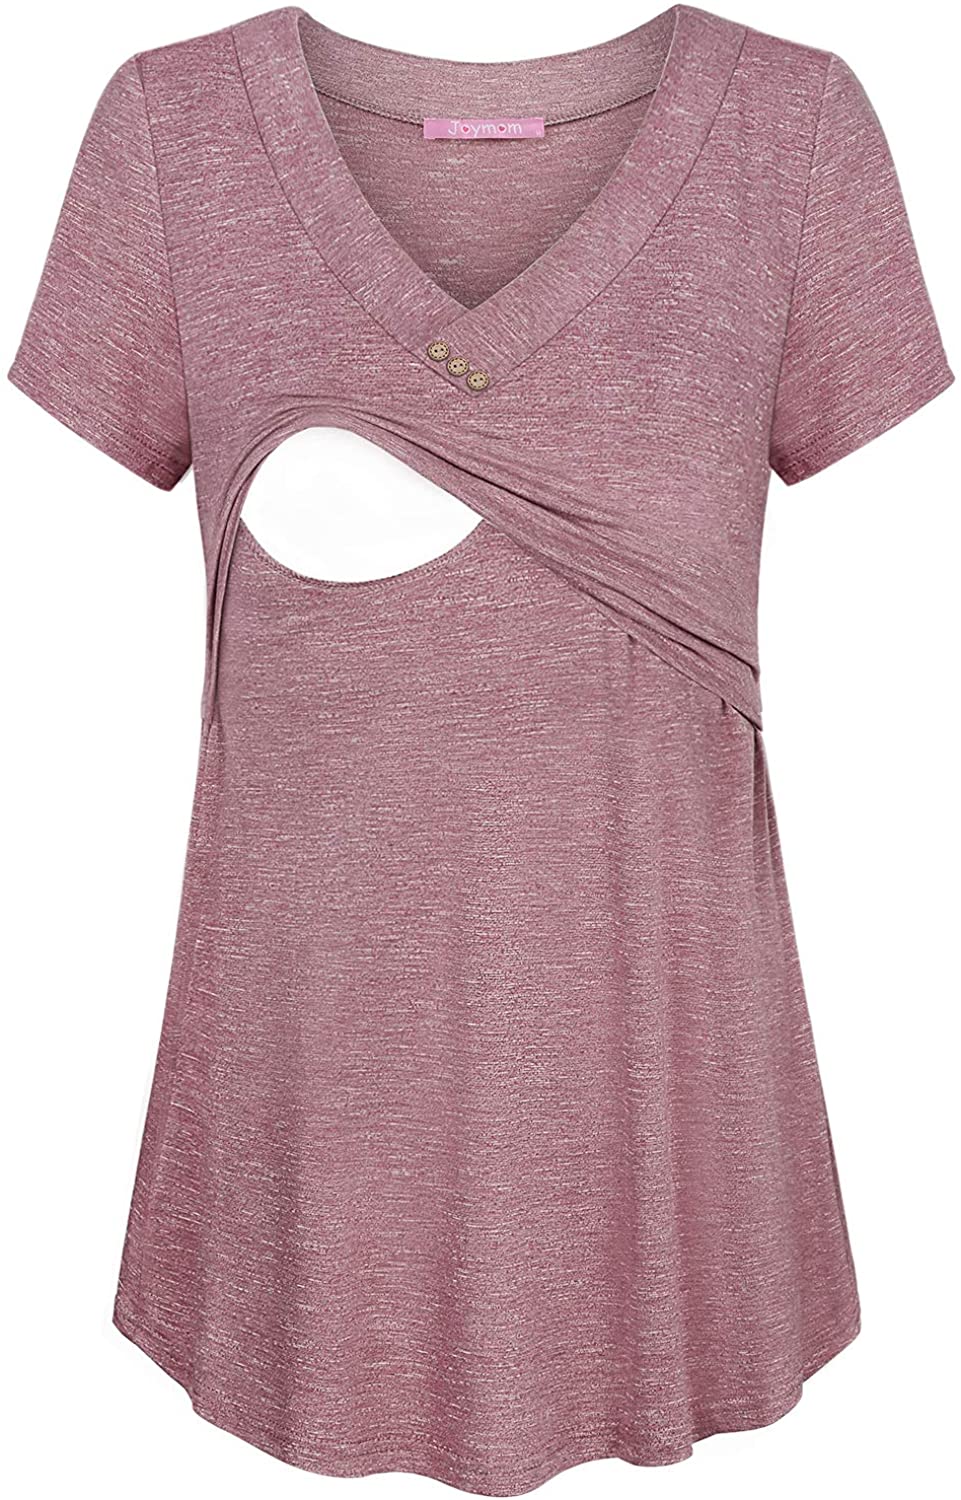 Joyspun Women's Short Sleeve Sleep Shirt, Sizes S/M to 2X/3X 